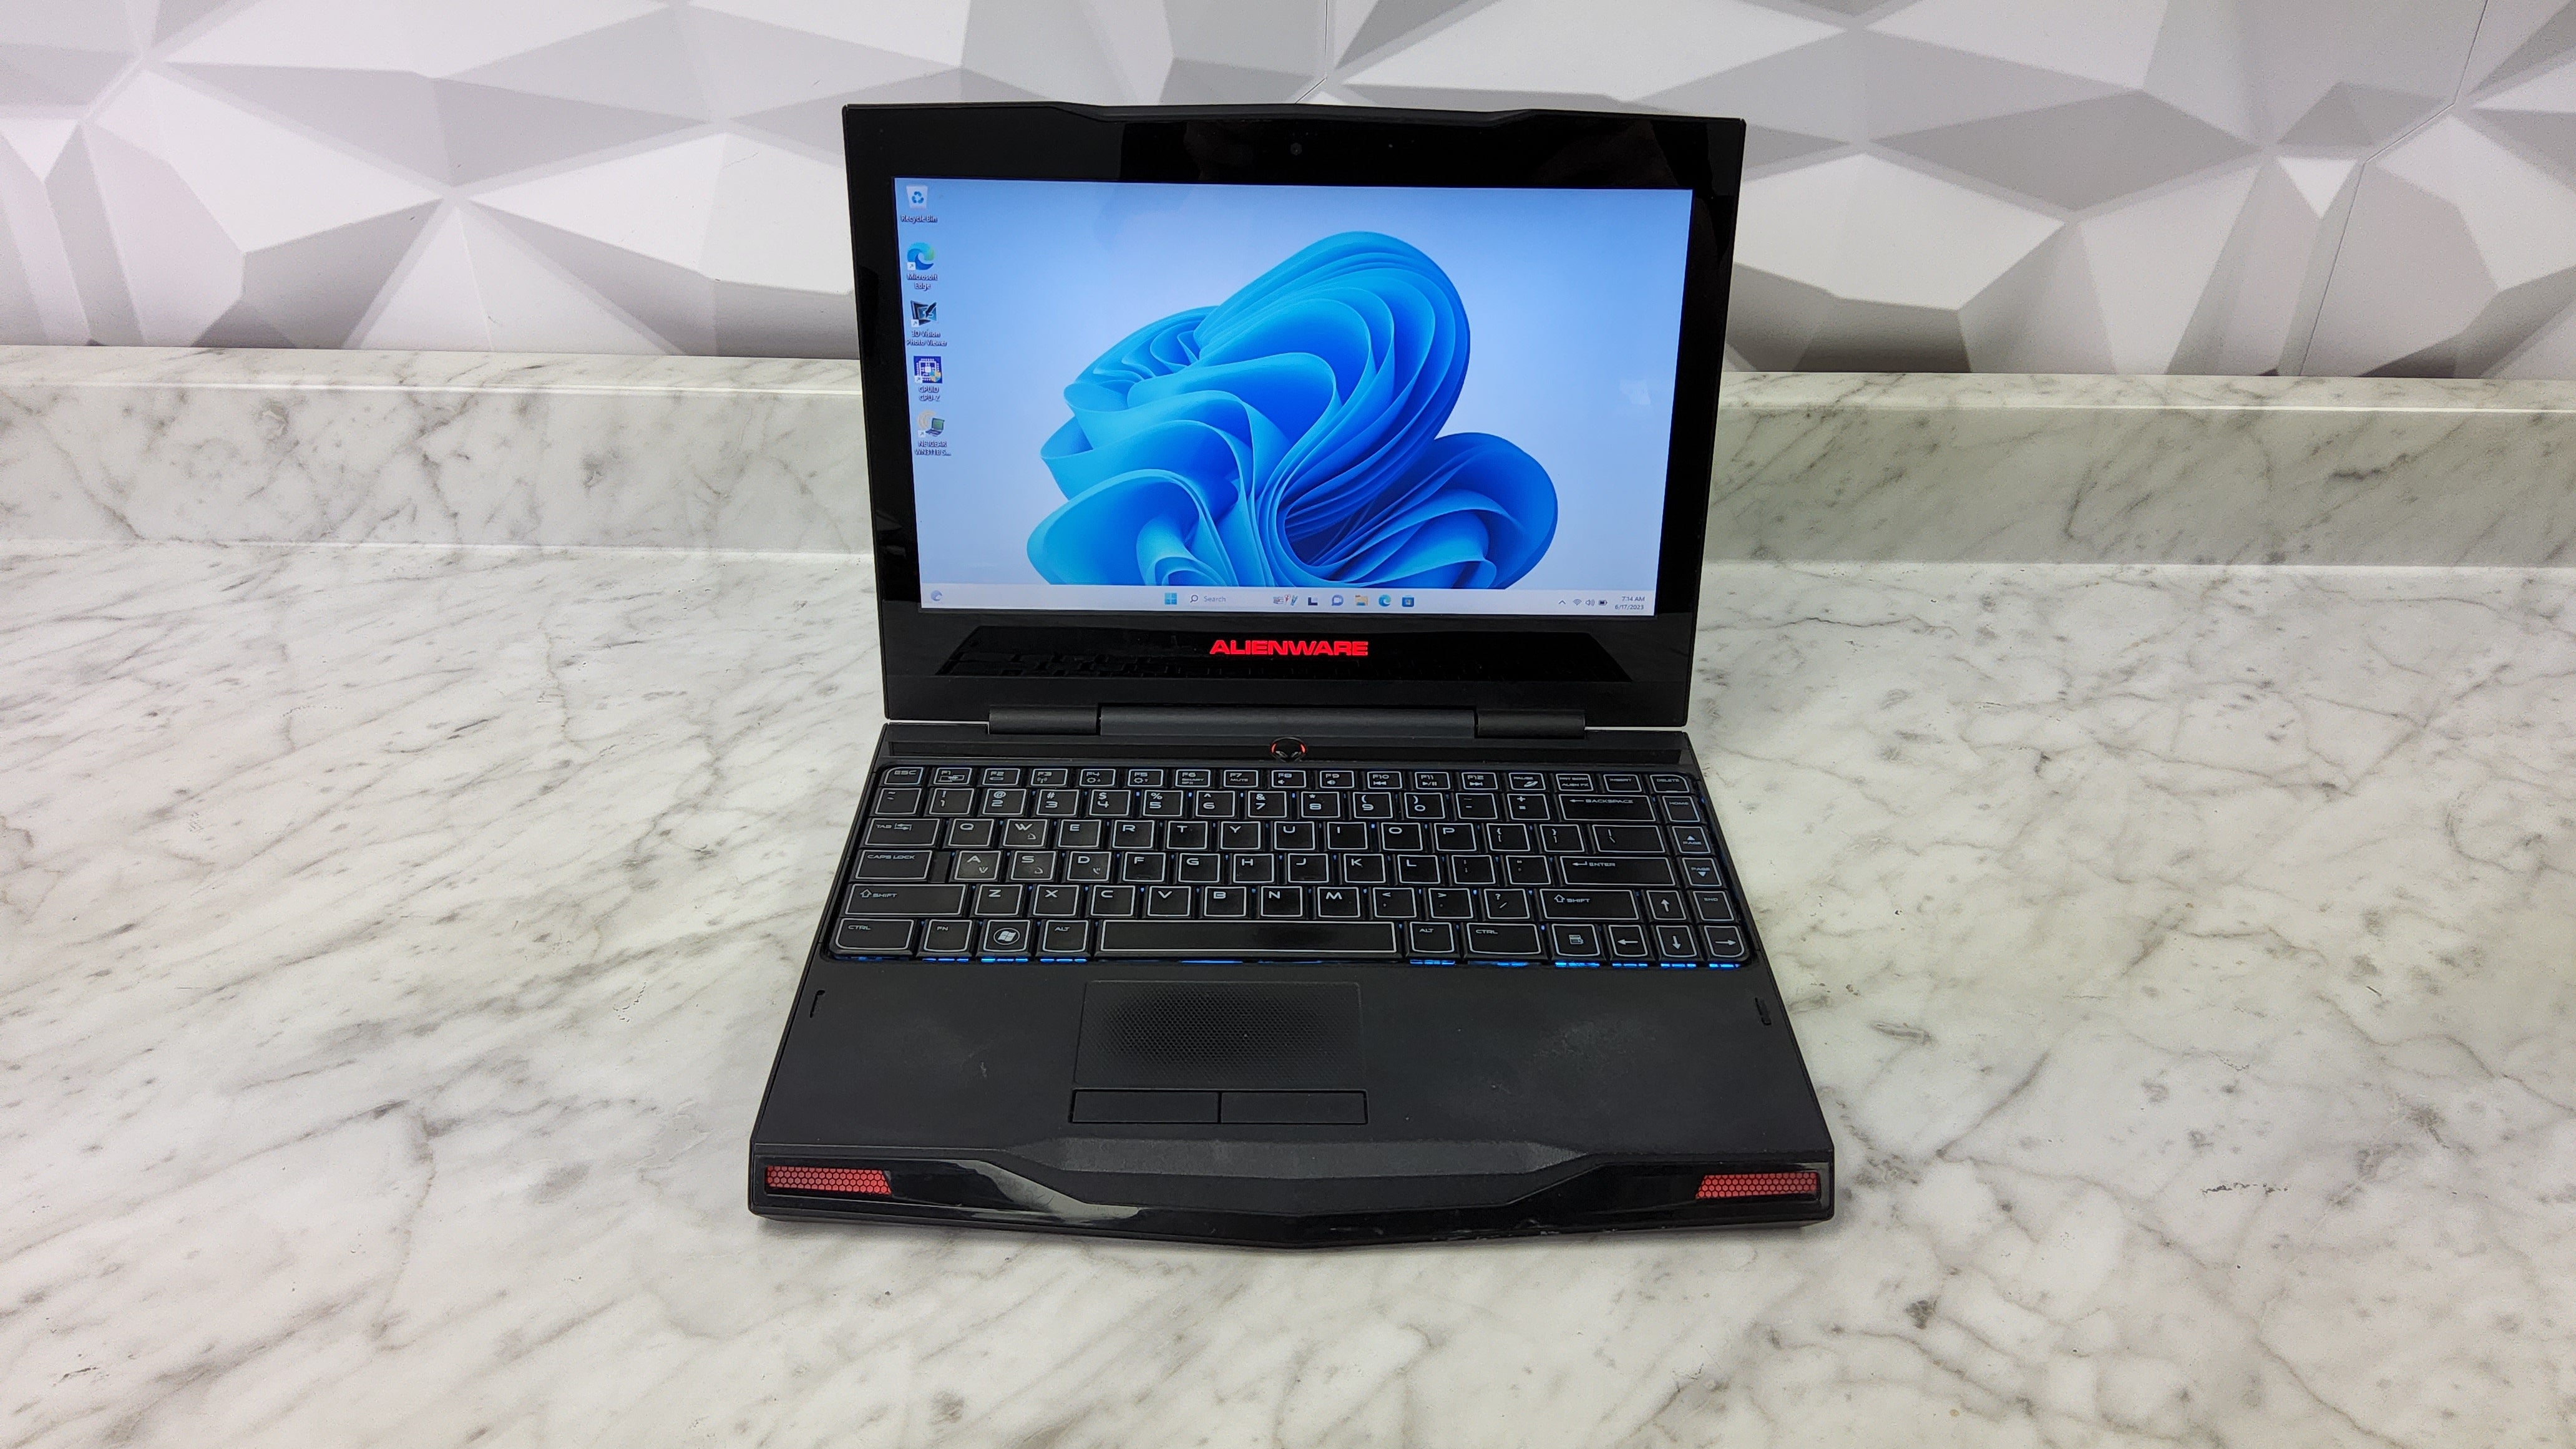 Alienware M11X - Intel U7300 + GT 335M Laptop (*FREE Shipping)